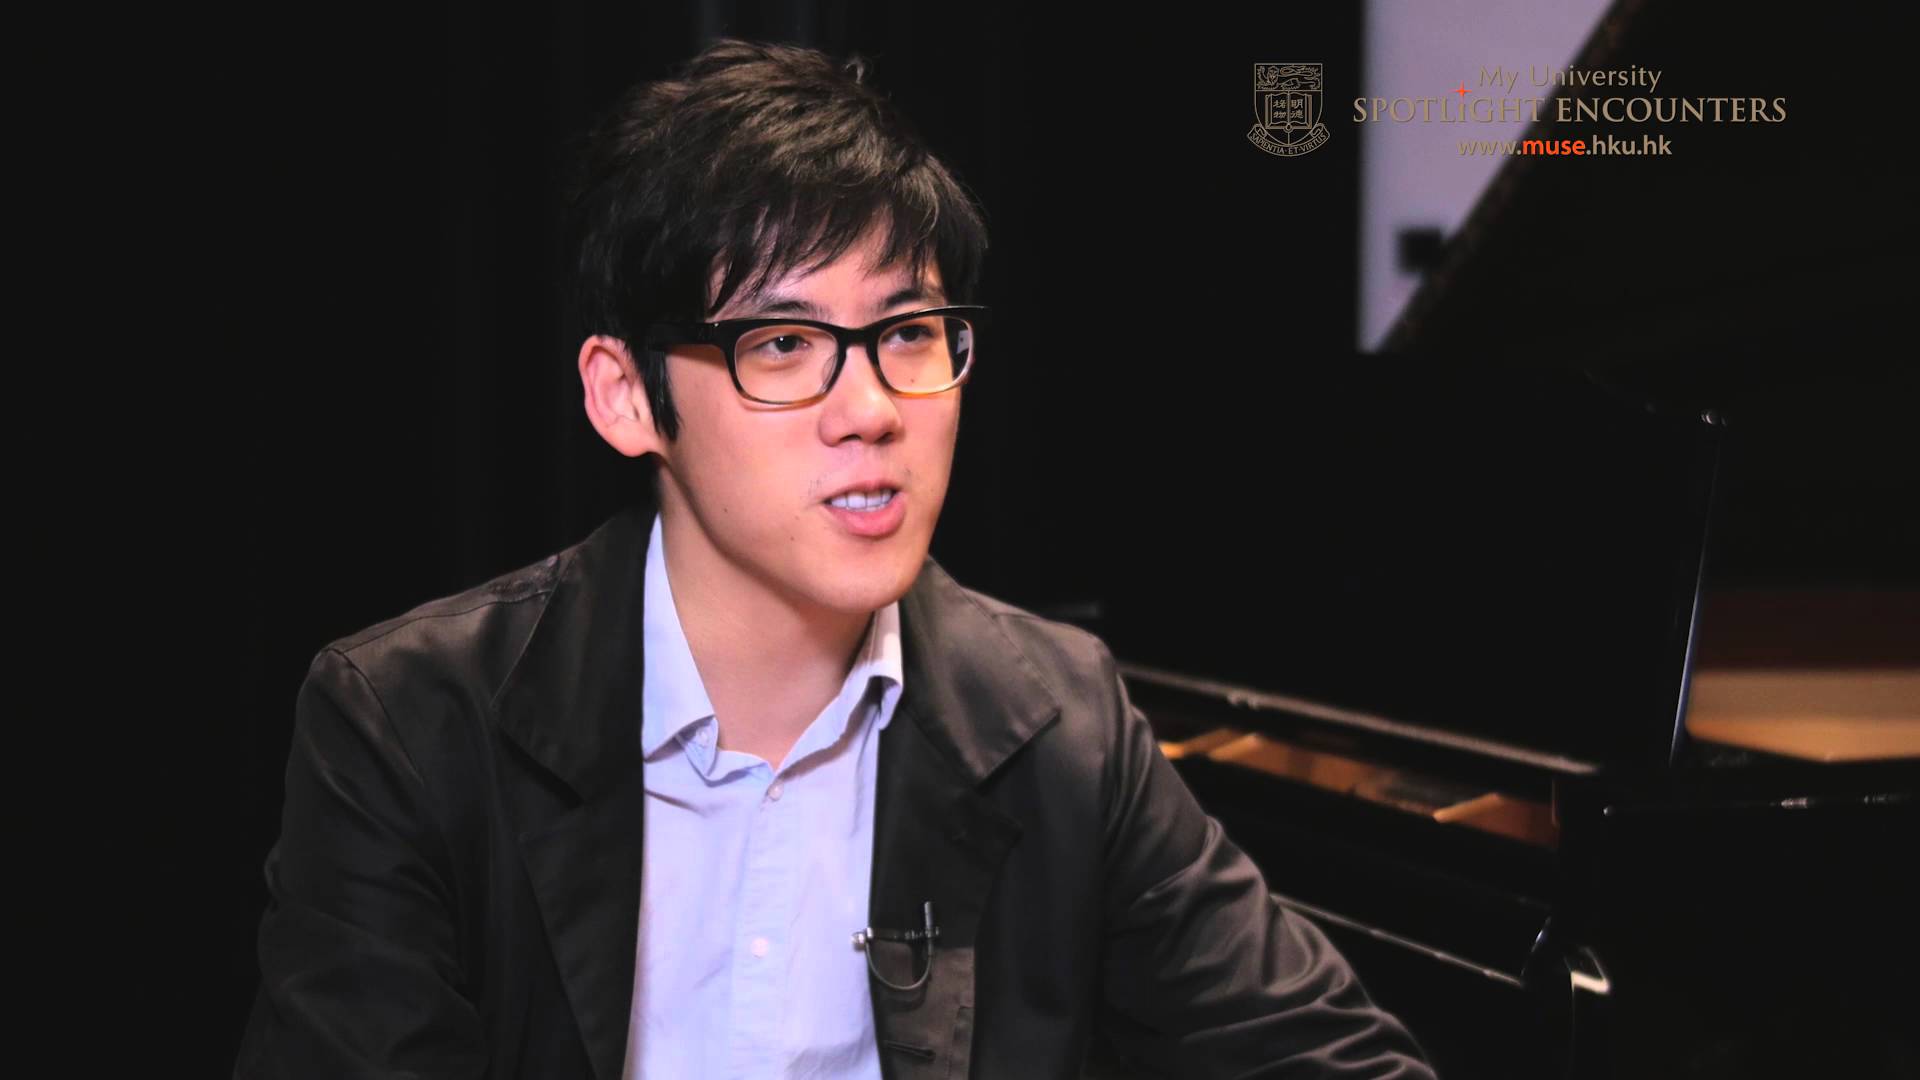 Haochen Zhang Piano Recital Highlights